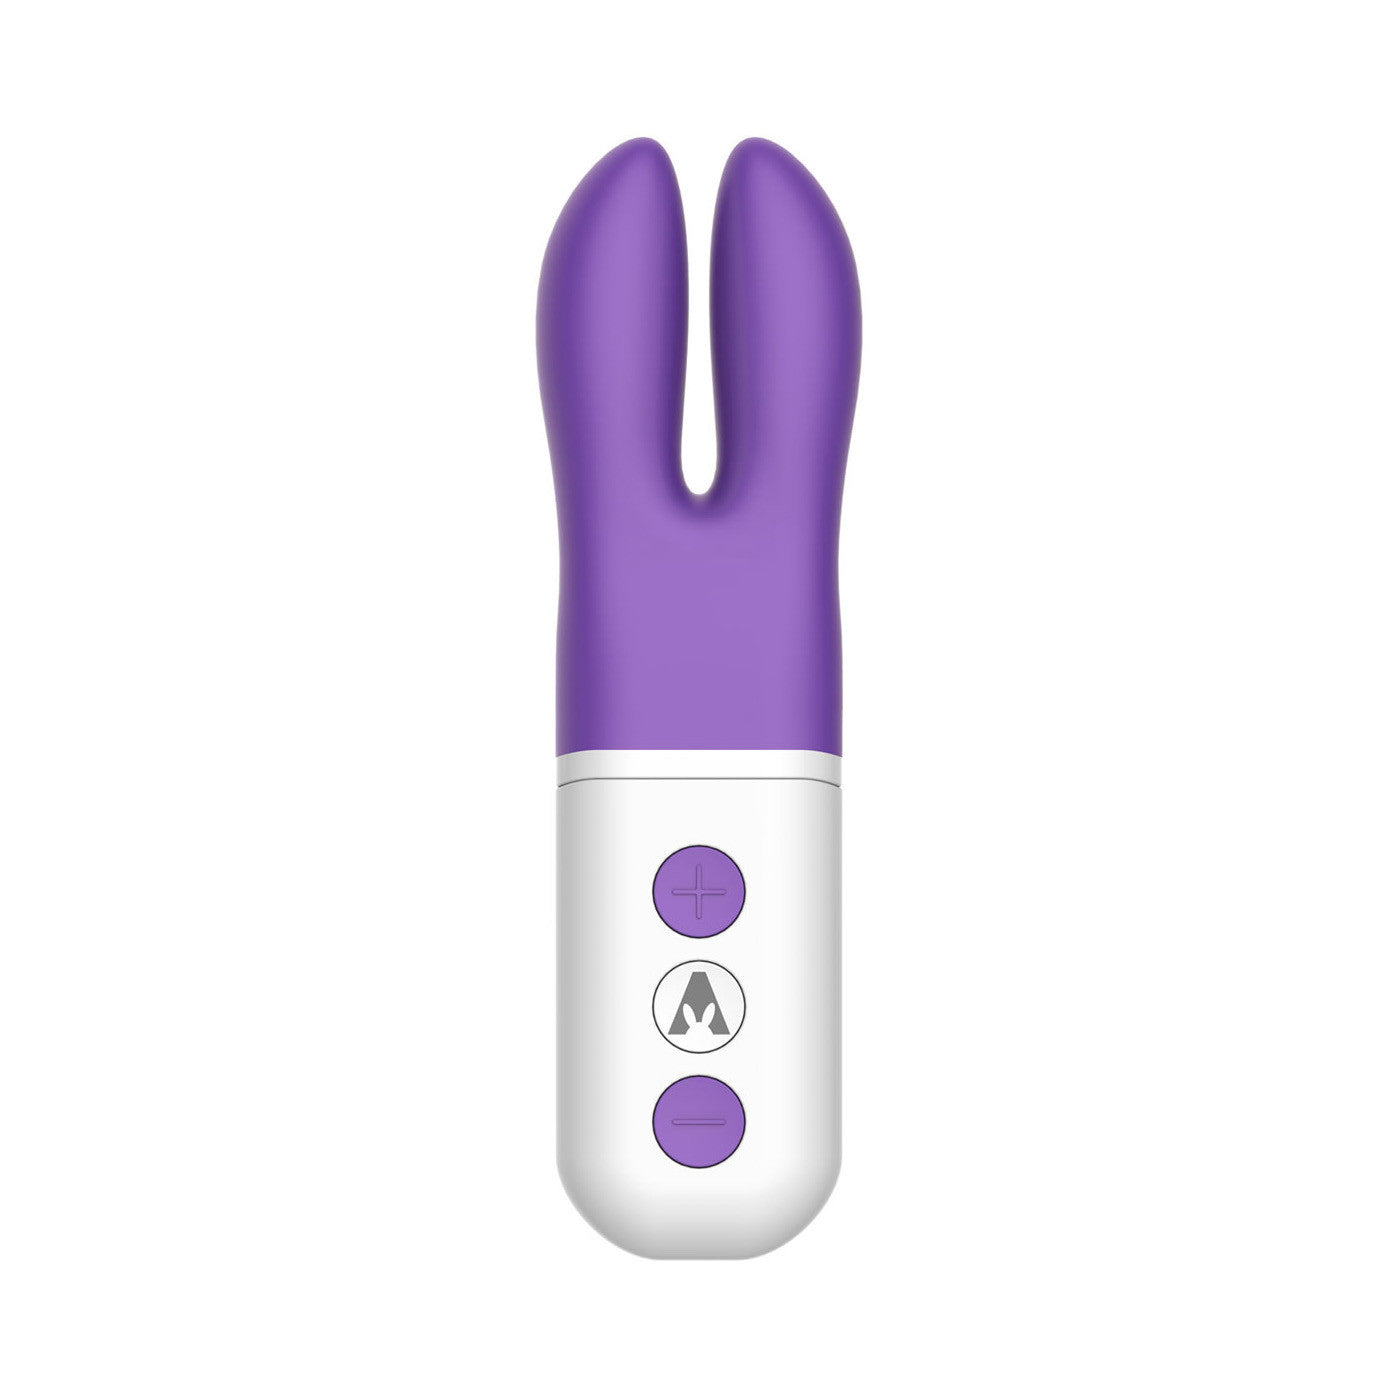 The Rabbit Company - The Pocket Rabbit Vibrator (Purple) -  Discreet Toys  Durio.sg